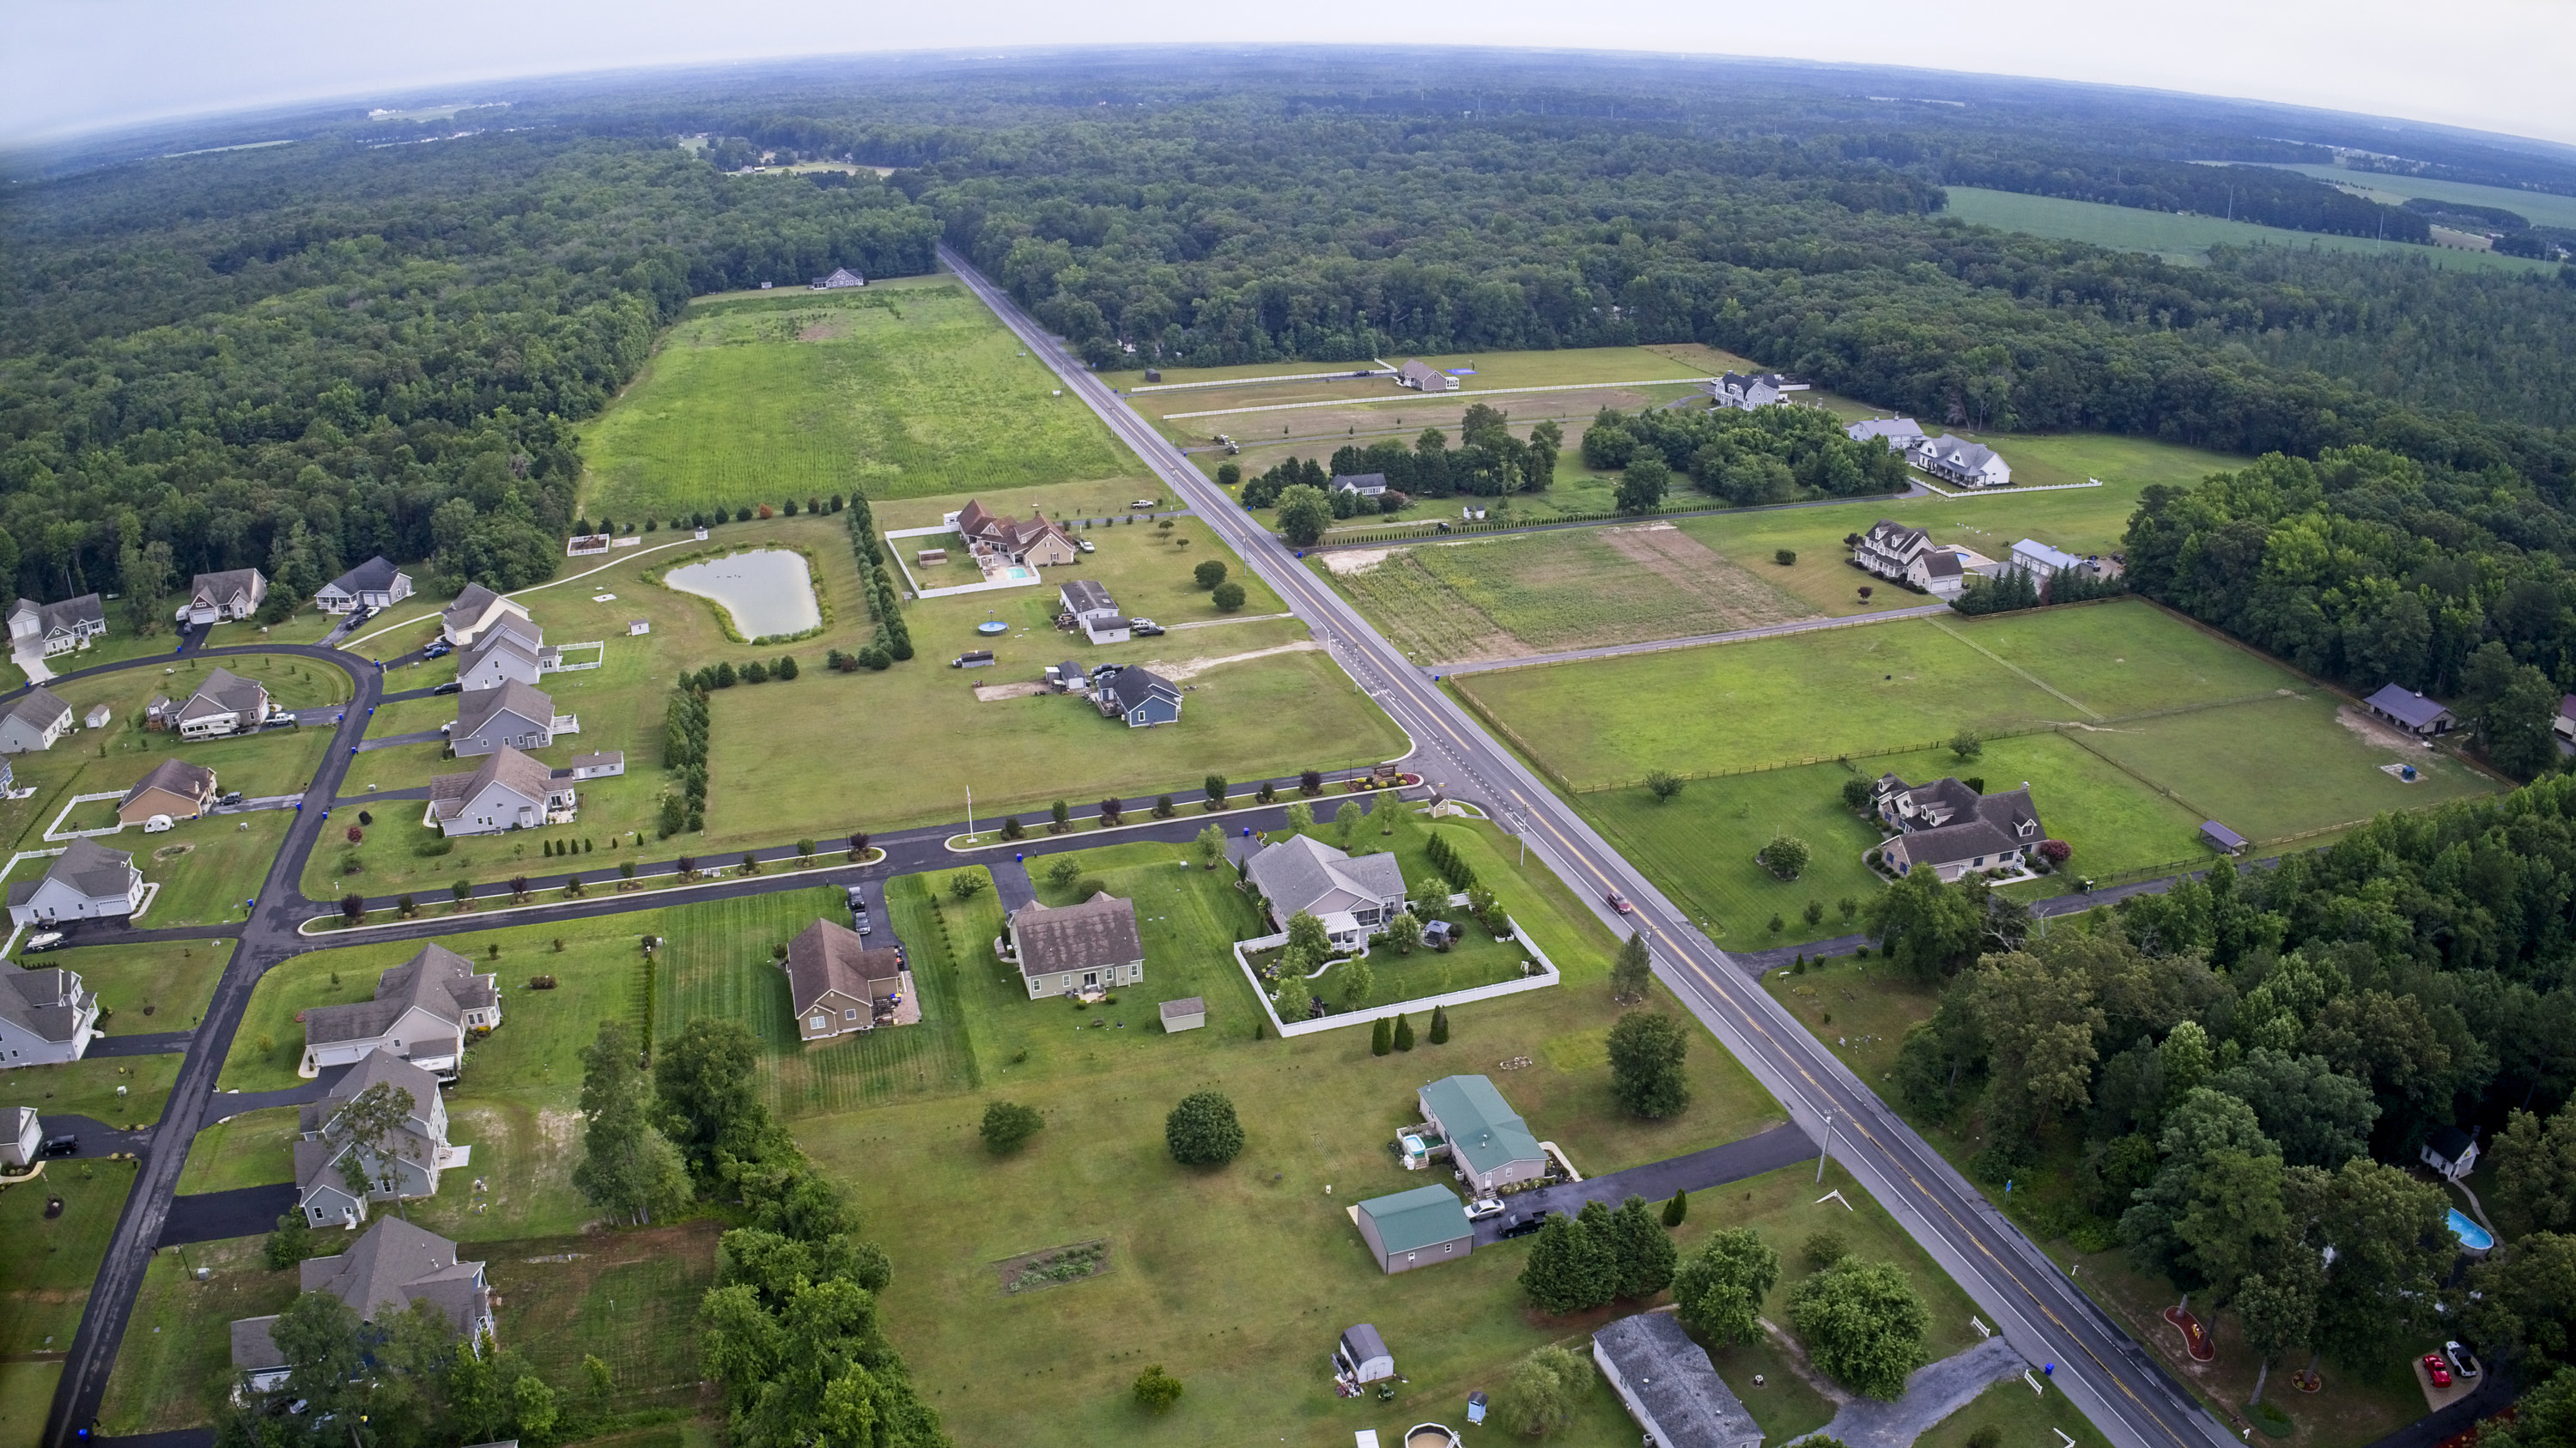 Aerial view over rural Delaware